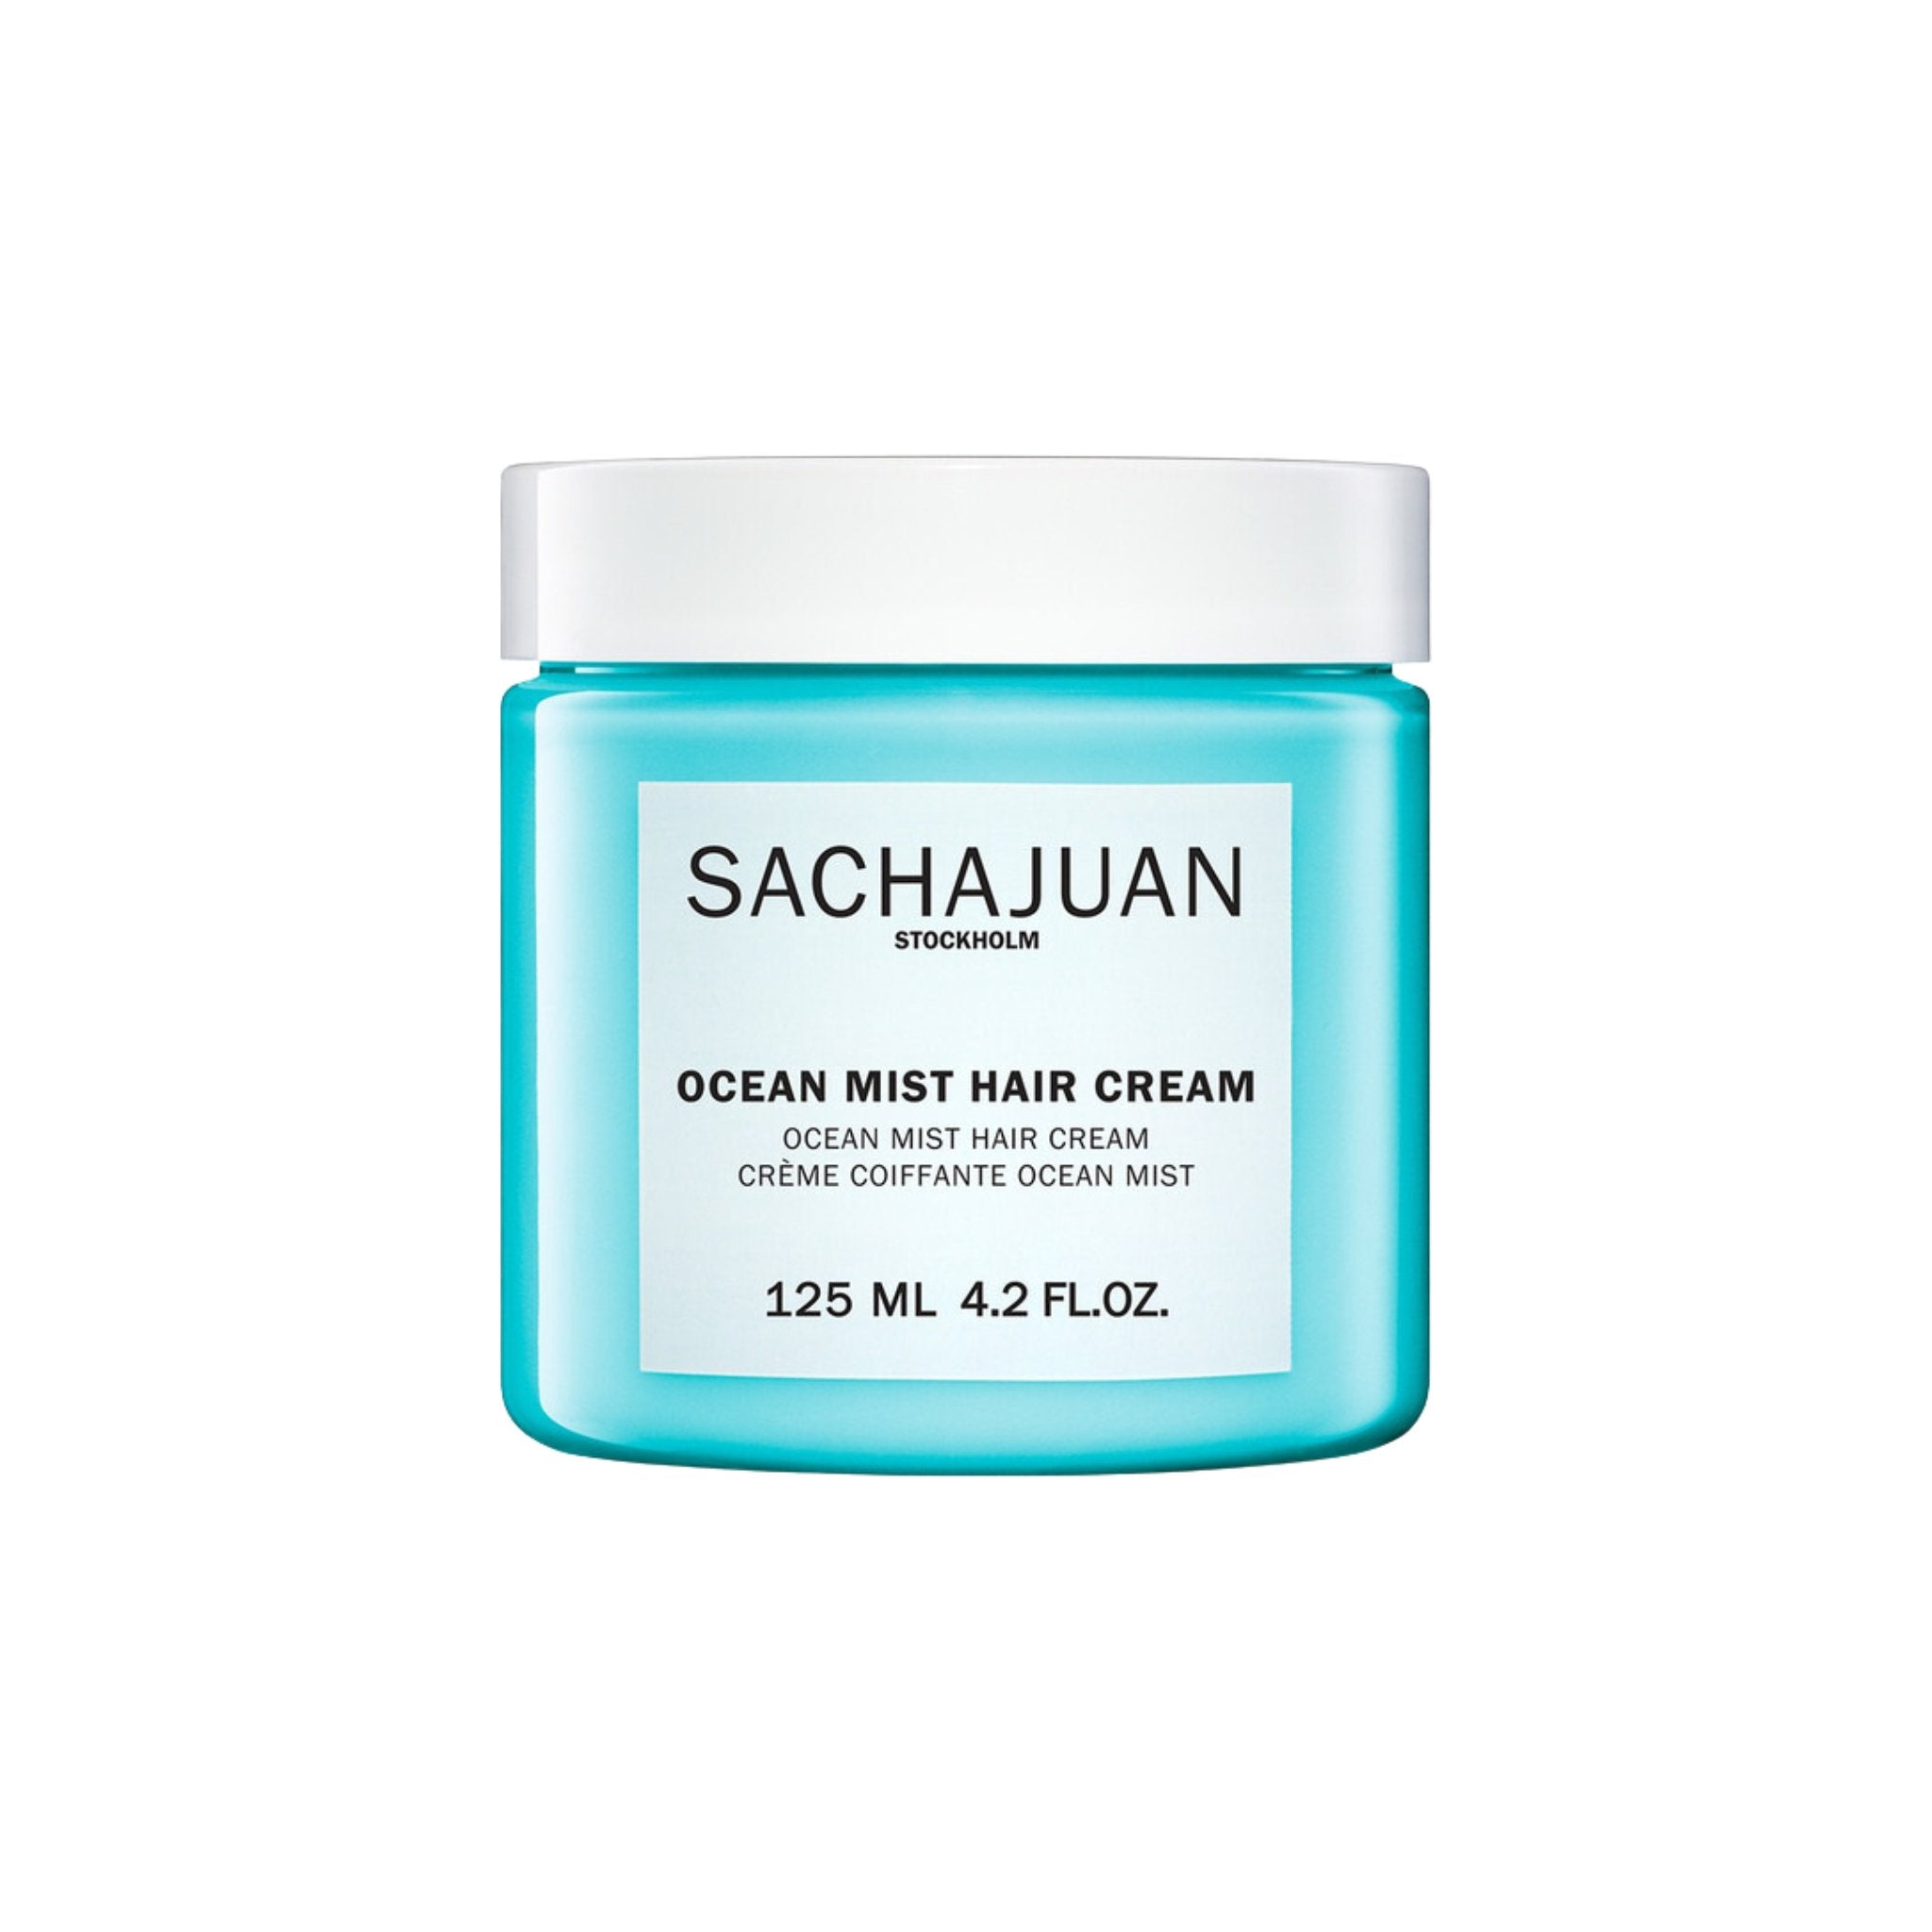 Sachajuan. Crème Coiffante Ocean Mist - 125 ml - Concept C. Shop